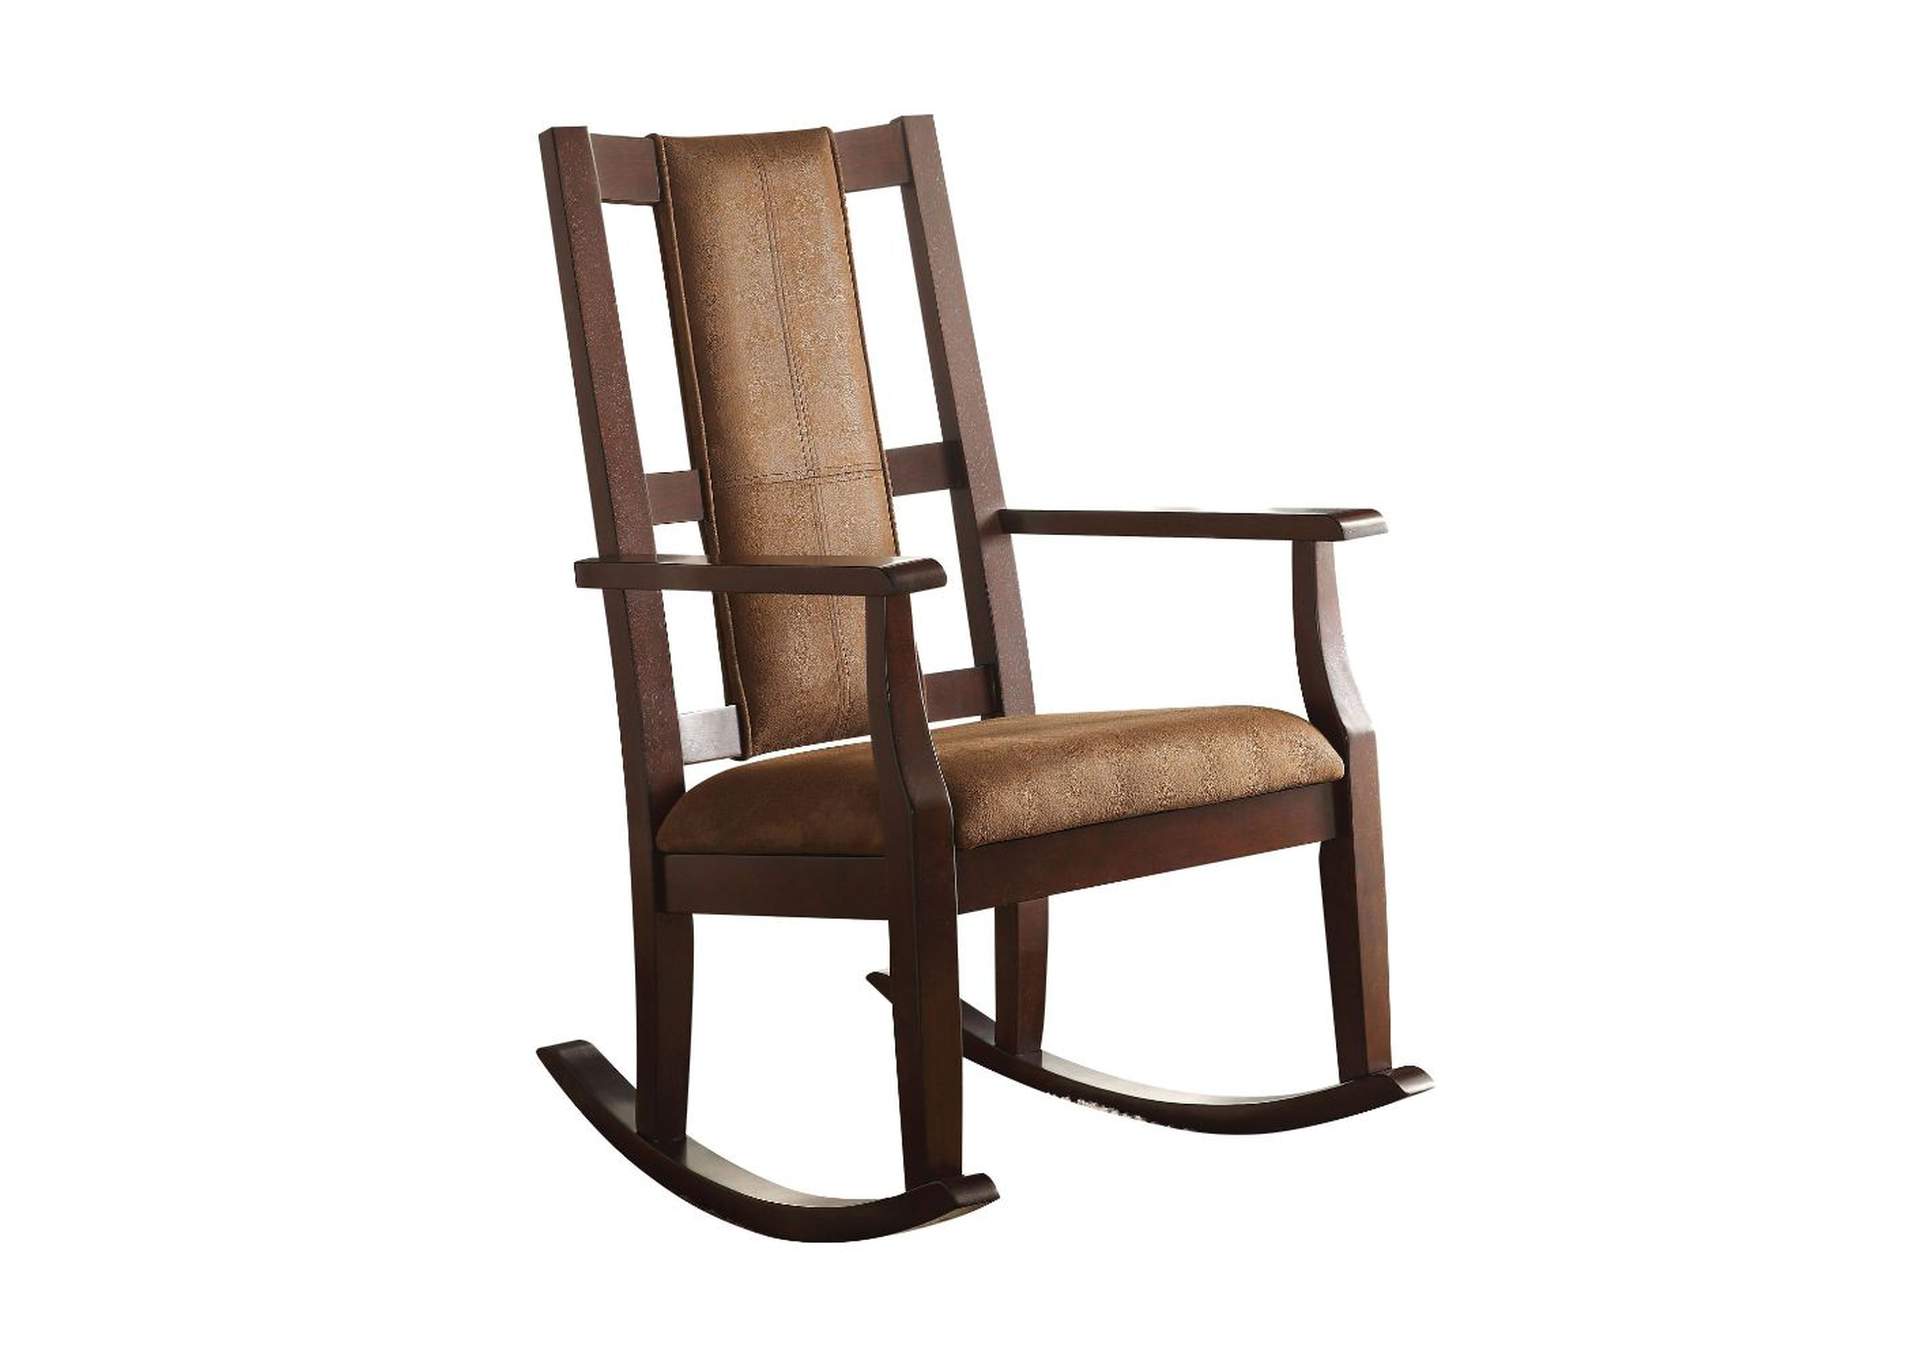 Butsea Rocking chair,Acme